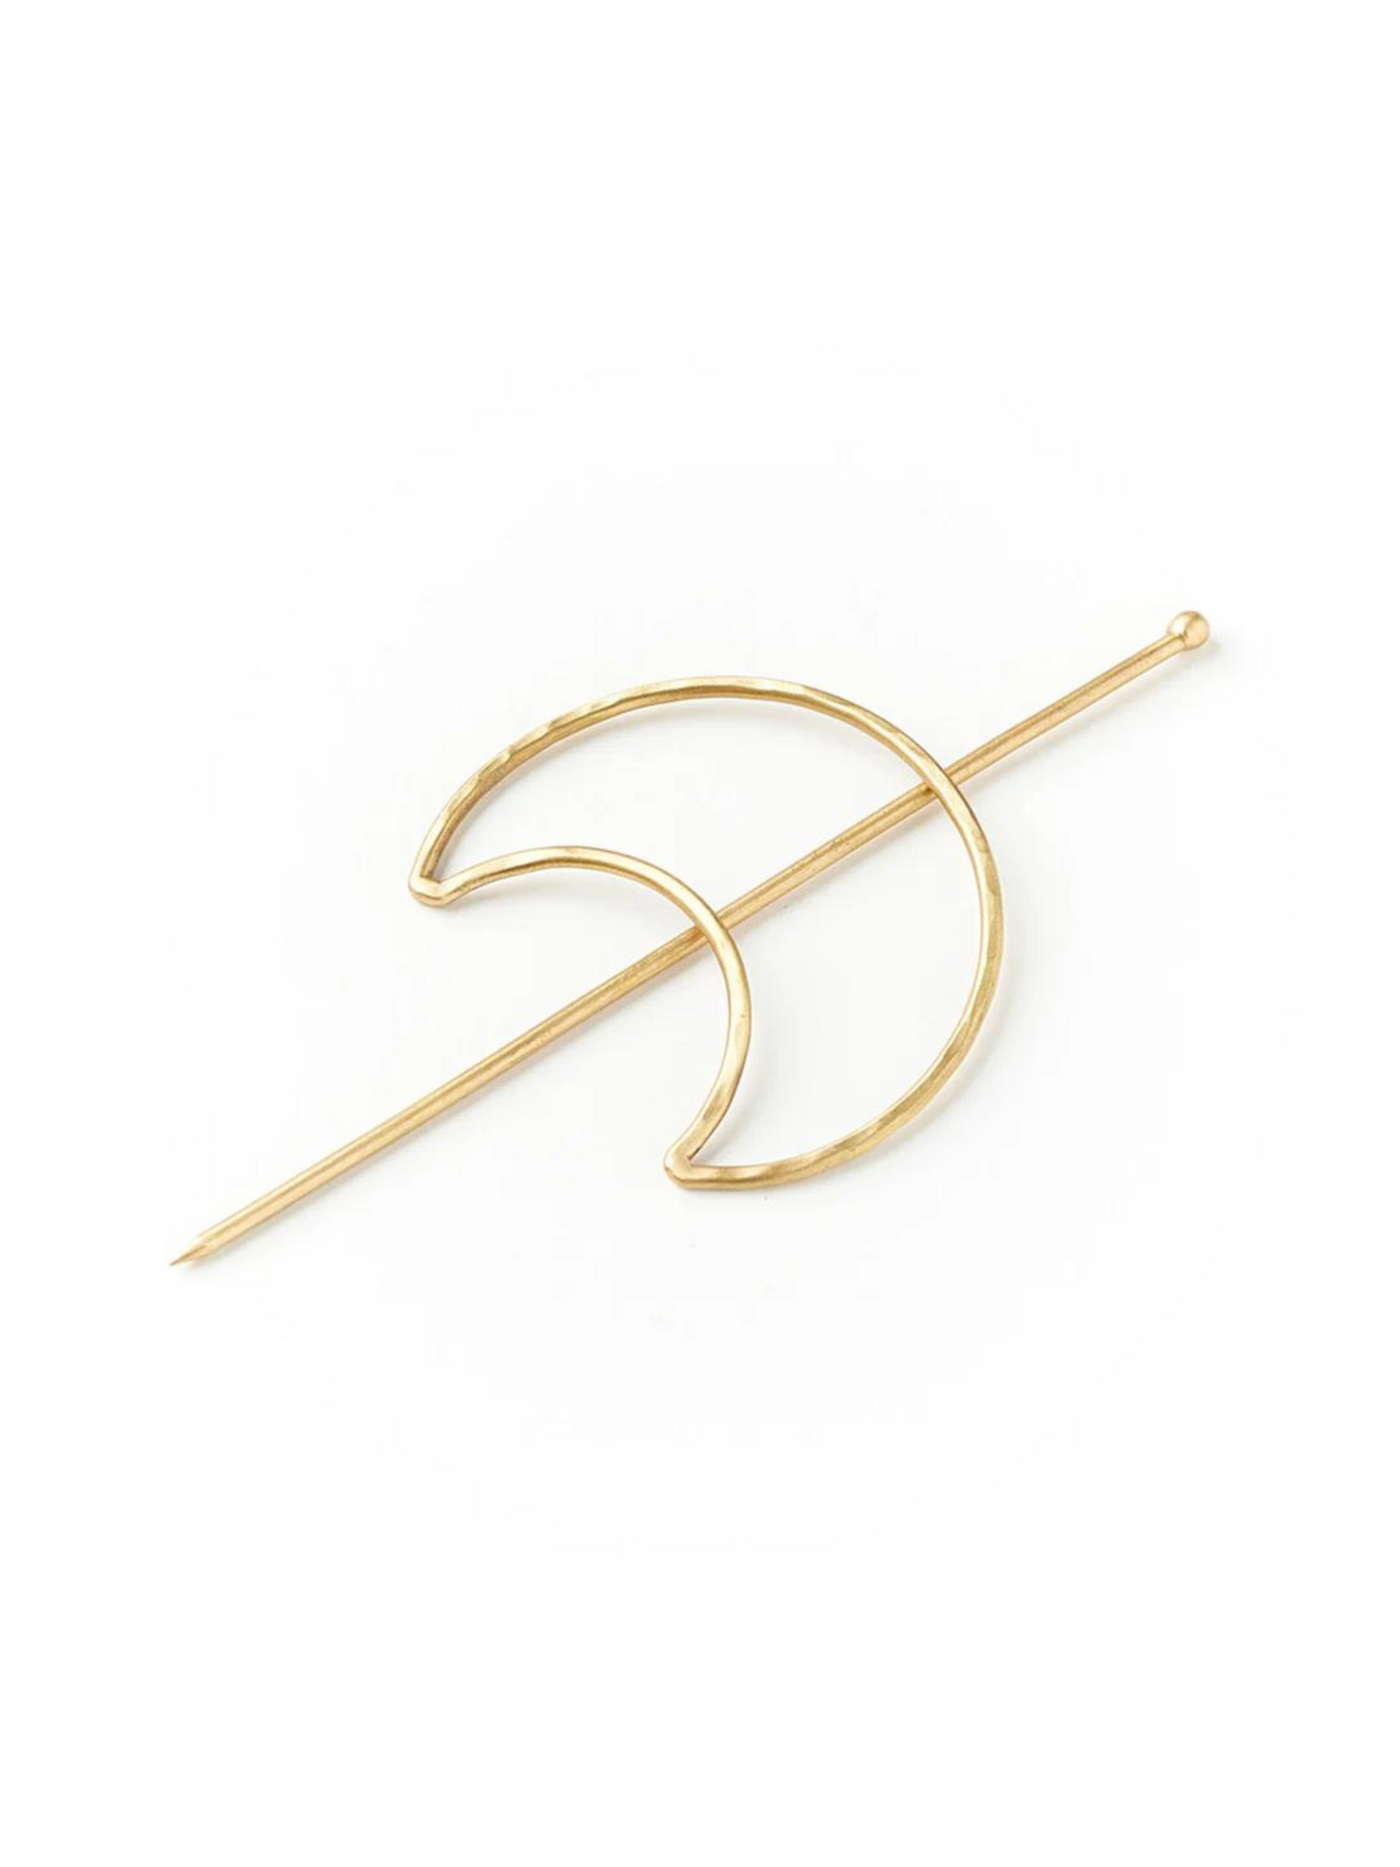 Crescent Moon Hair Stick - Gold